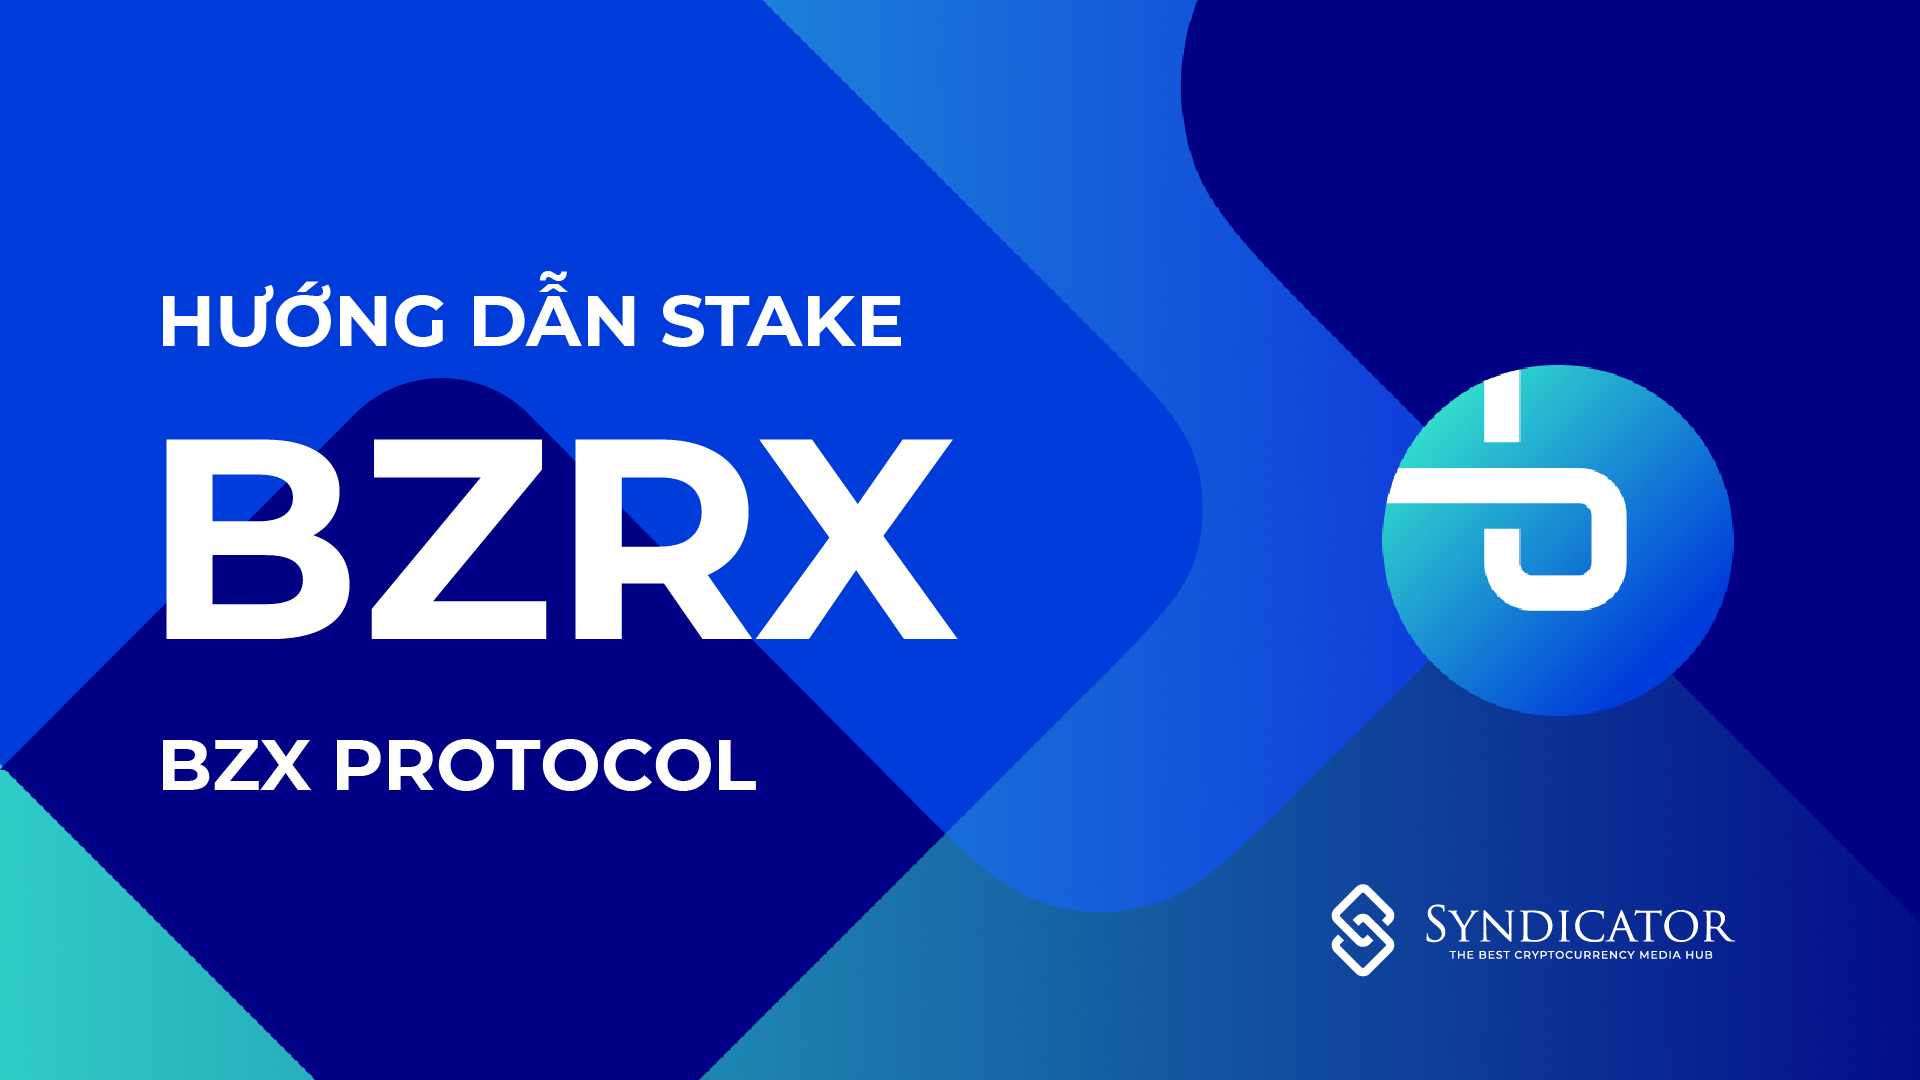 Hướng dẫn Stake token BZRX (bZx Protocol) | Syndicator